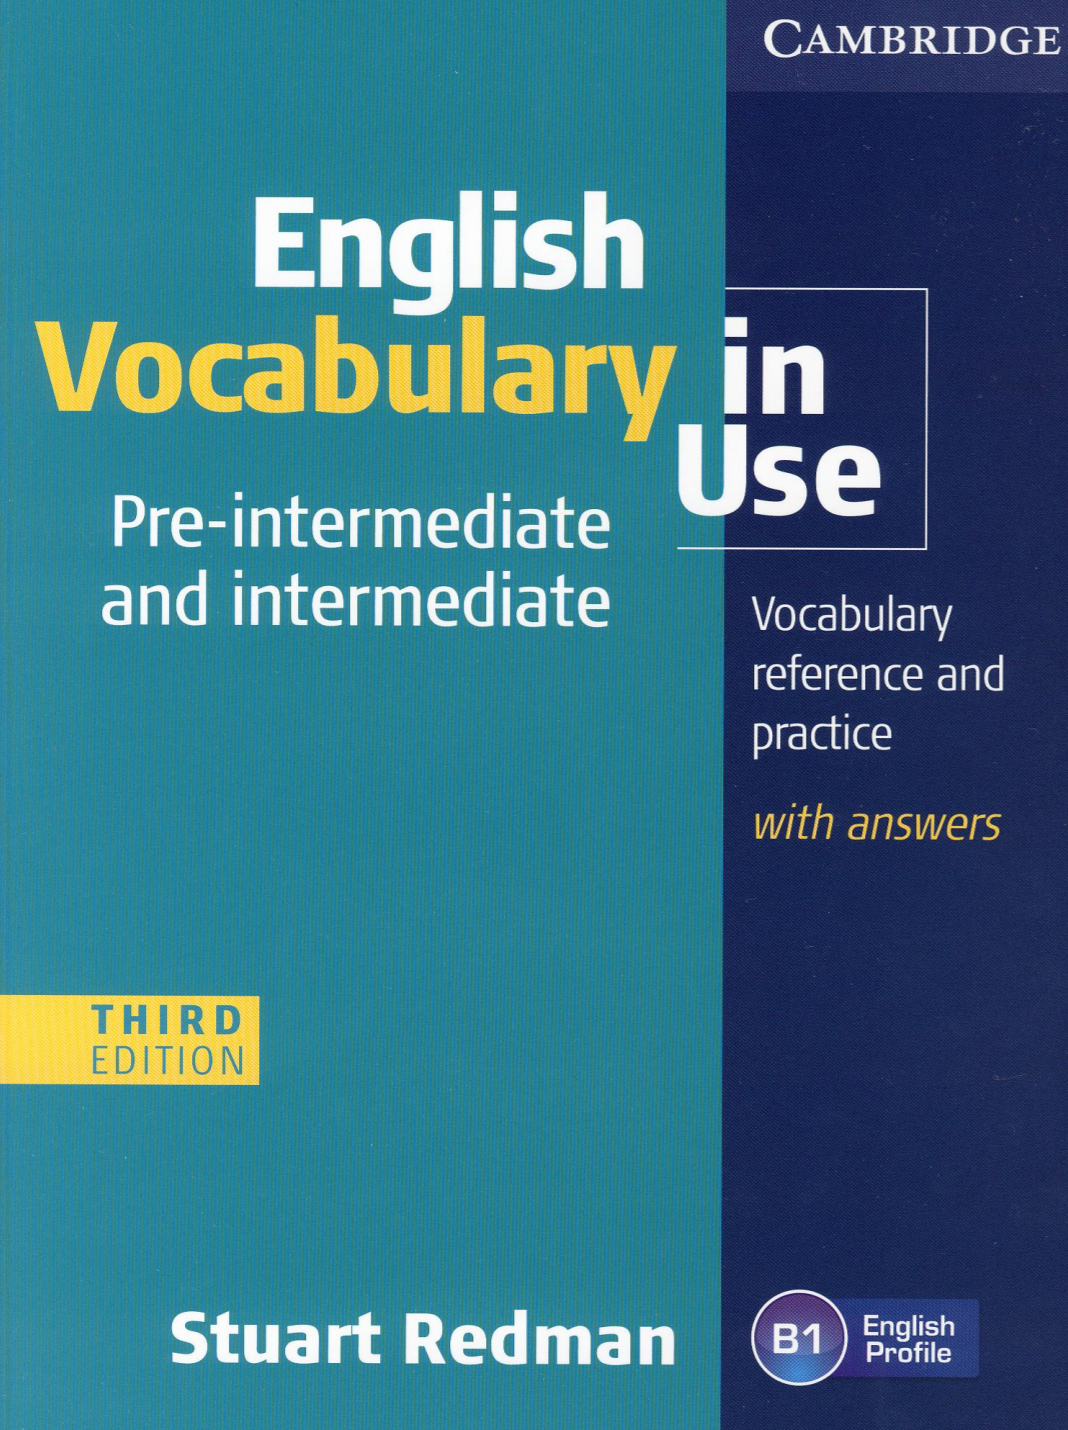 Test english vocabulary in use. Cambridge English Vocabulary in use. Book English Vocabulary in use pre Intermediate. English Vocabulary in use pre-Intermediate. English Vocabulary in use for pre-Intermediate and Intermediate..